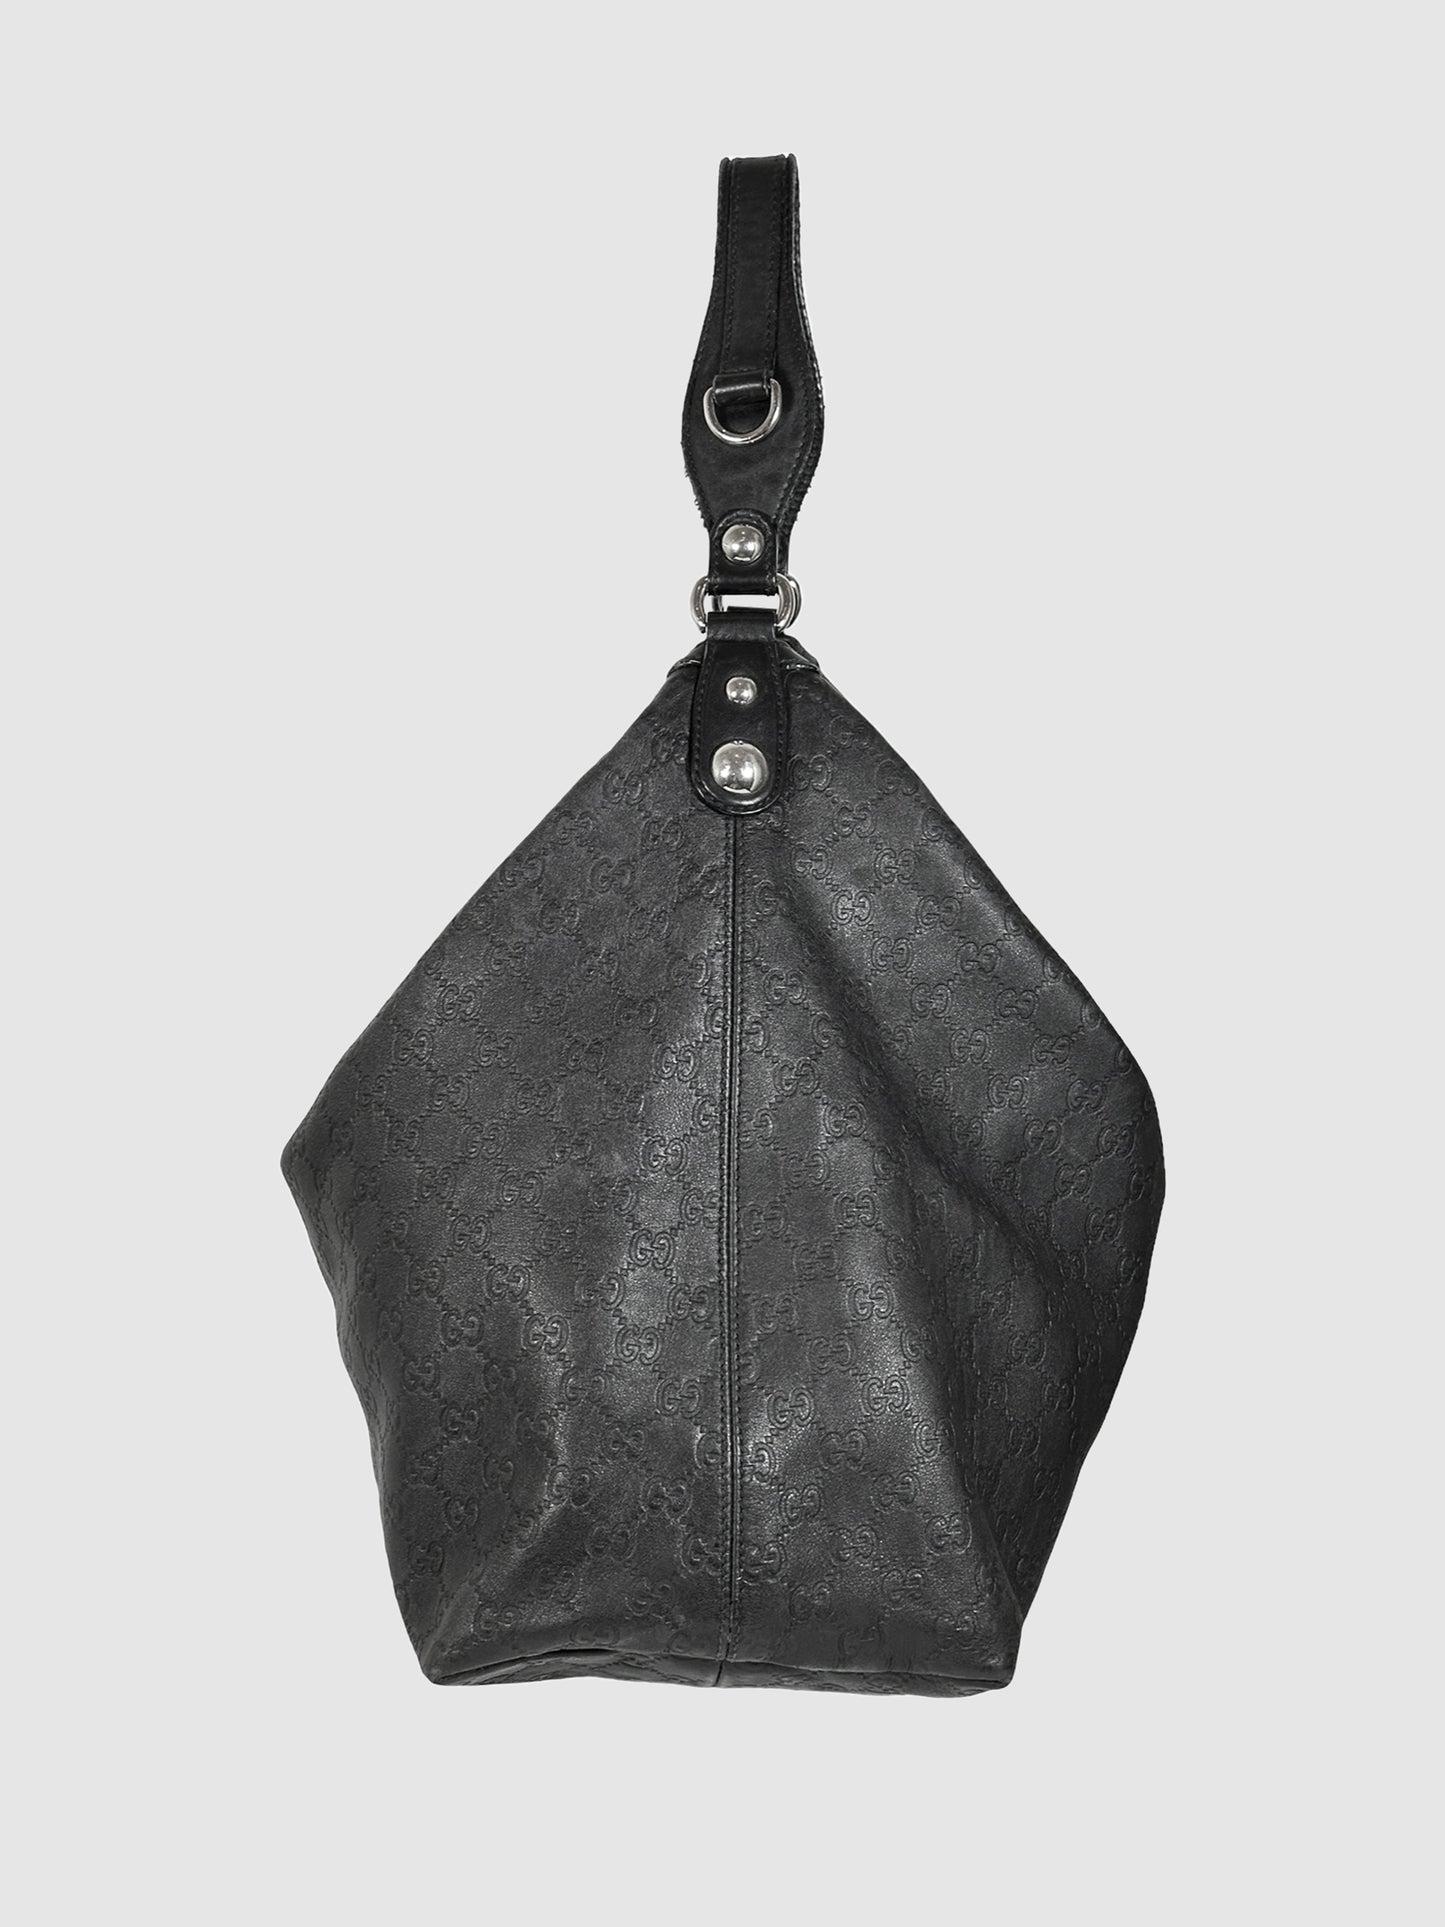 Guccissima Leather Hobo Bag